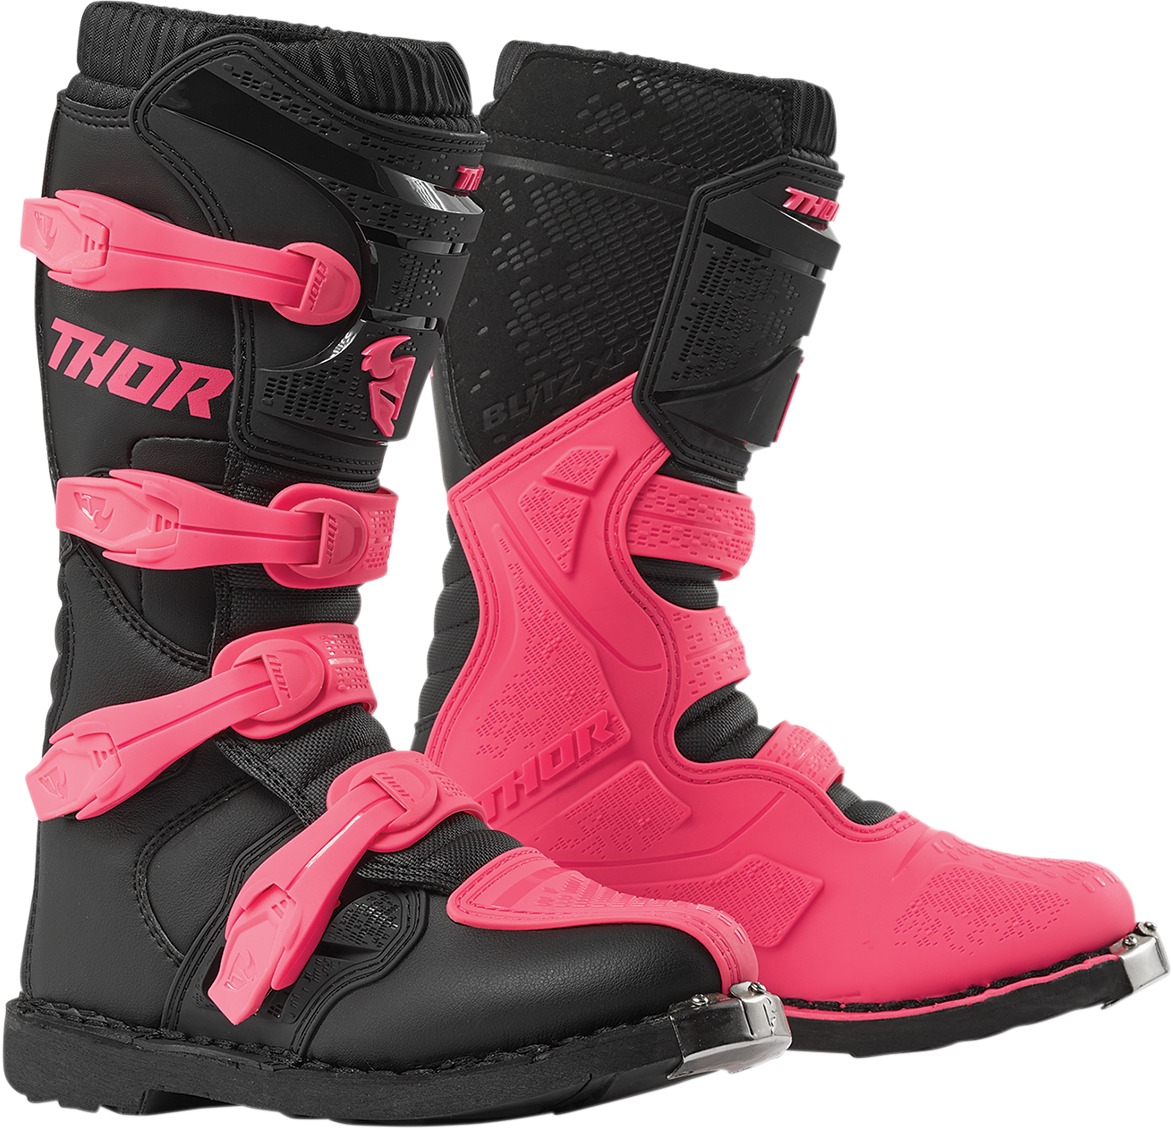 Blitz XP Dirt Bike Boots - Black & Pink Women's Size 10 - Click Image to Close